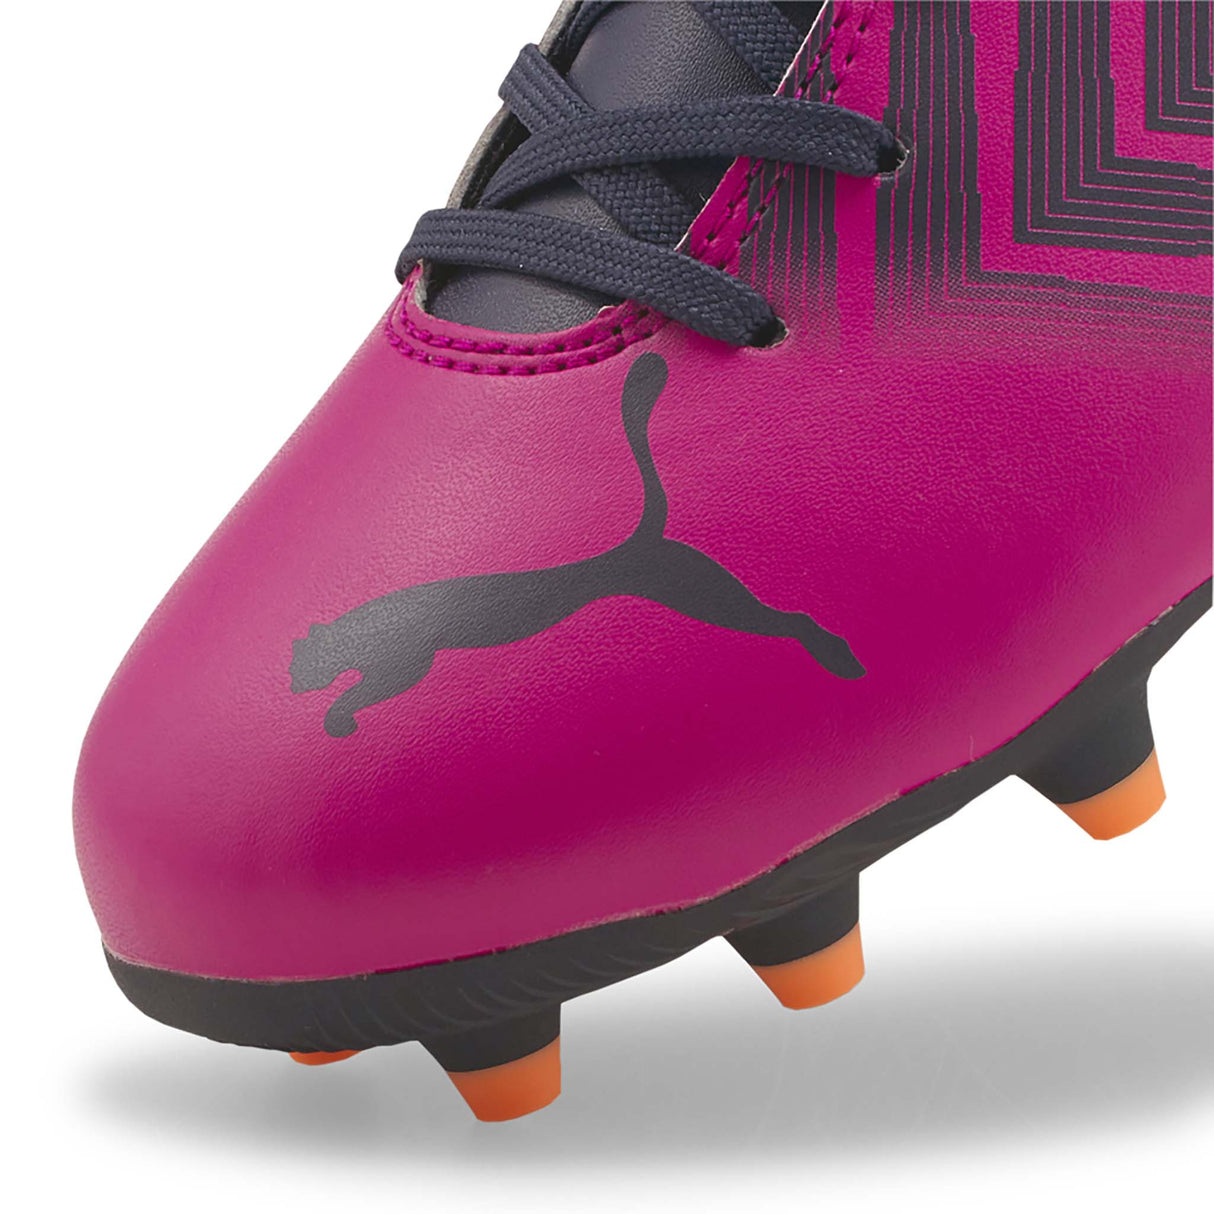 Puma Tacto II FG/AG Junior souliers soccer crampons rose noir enfant pointe